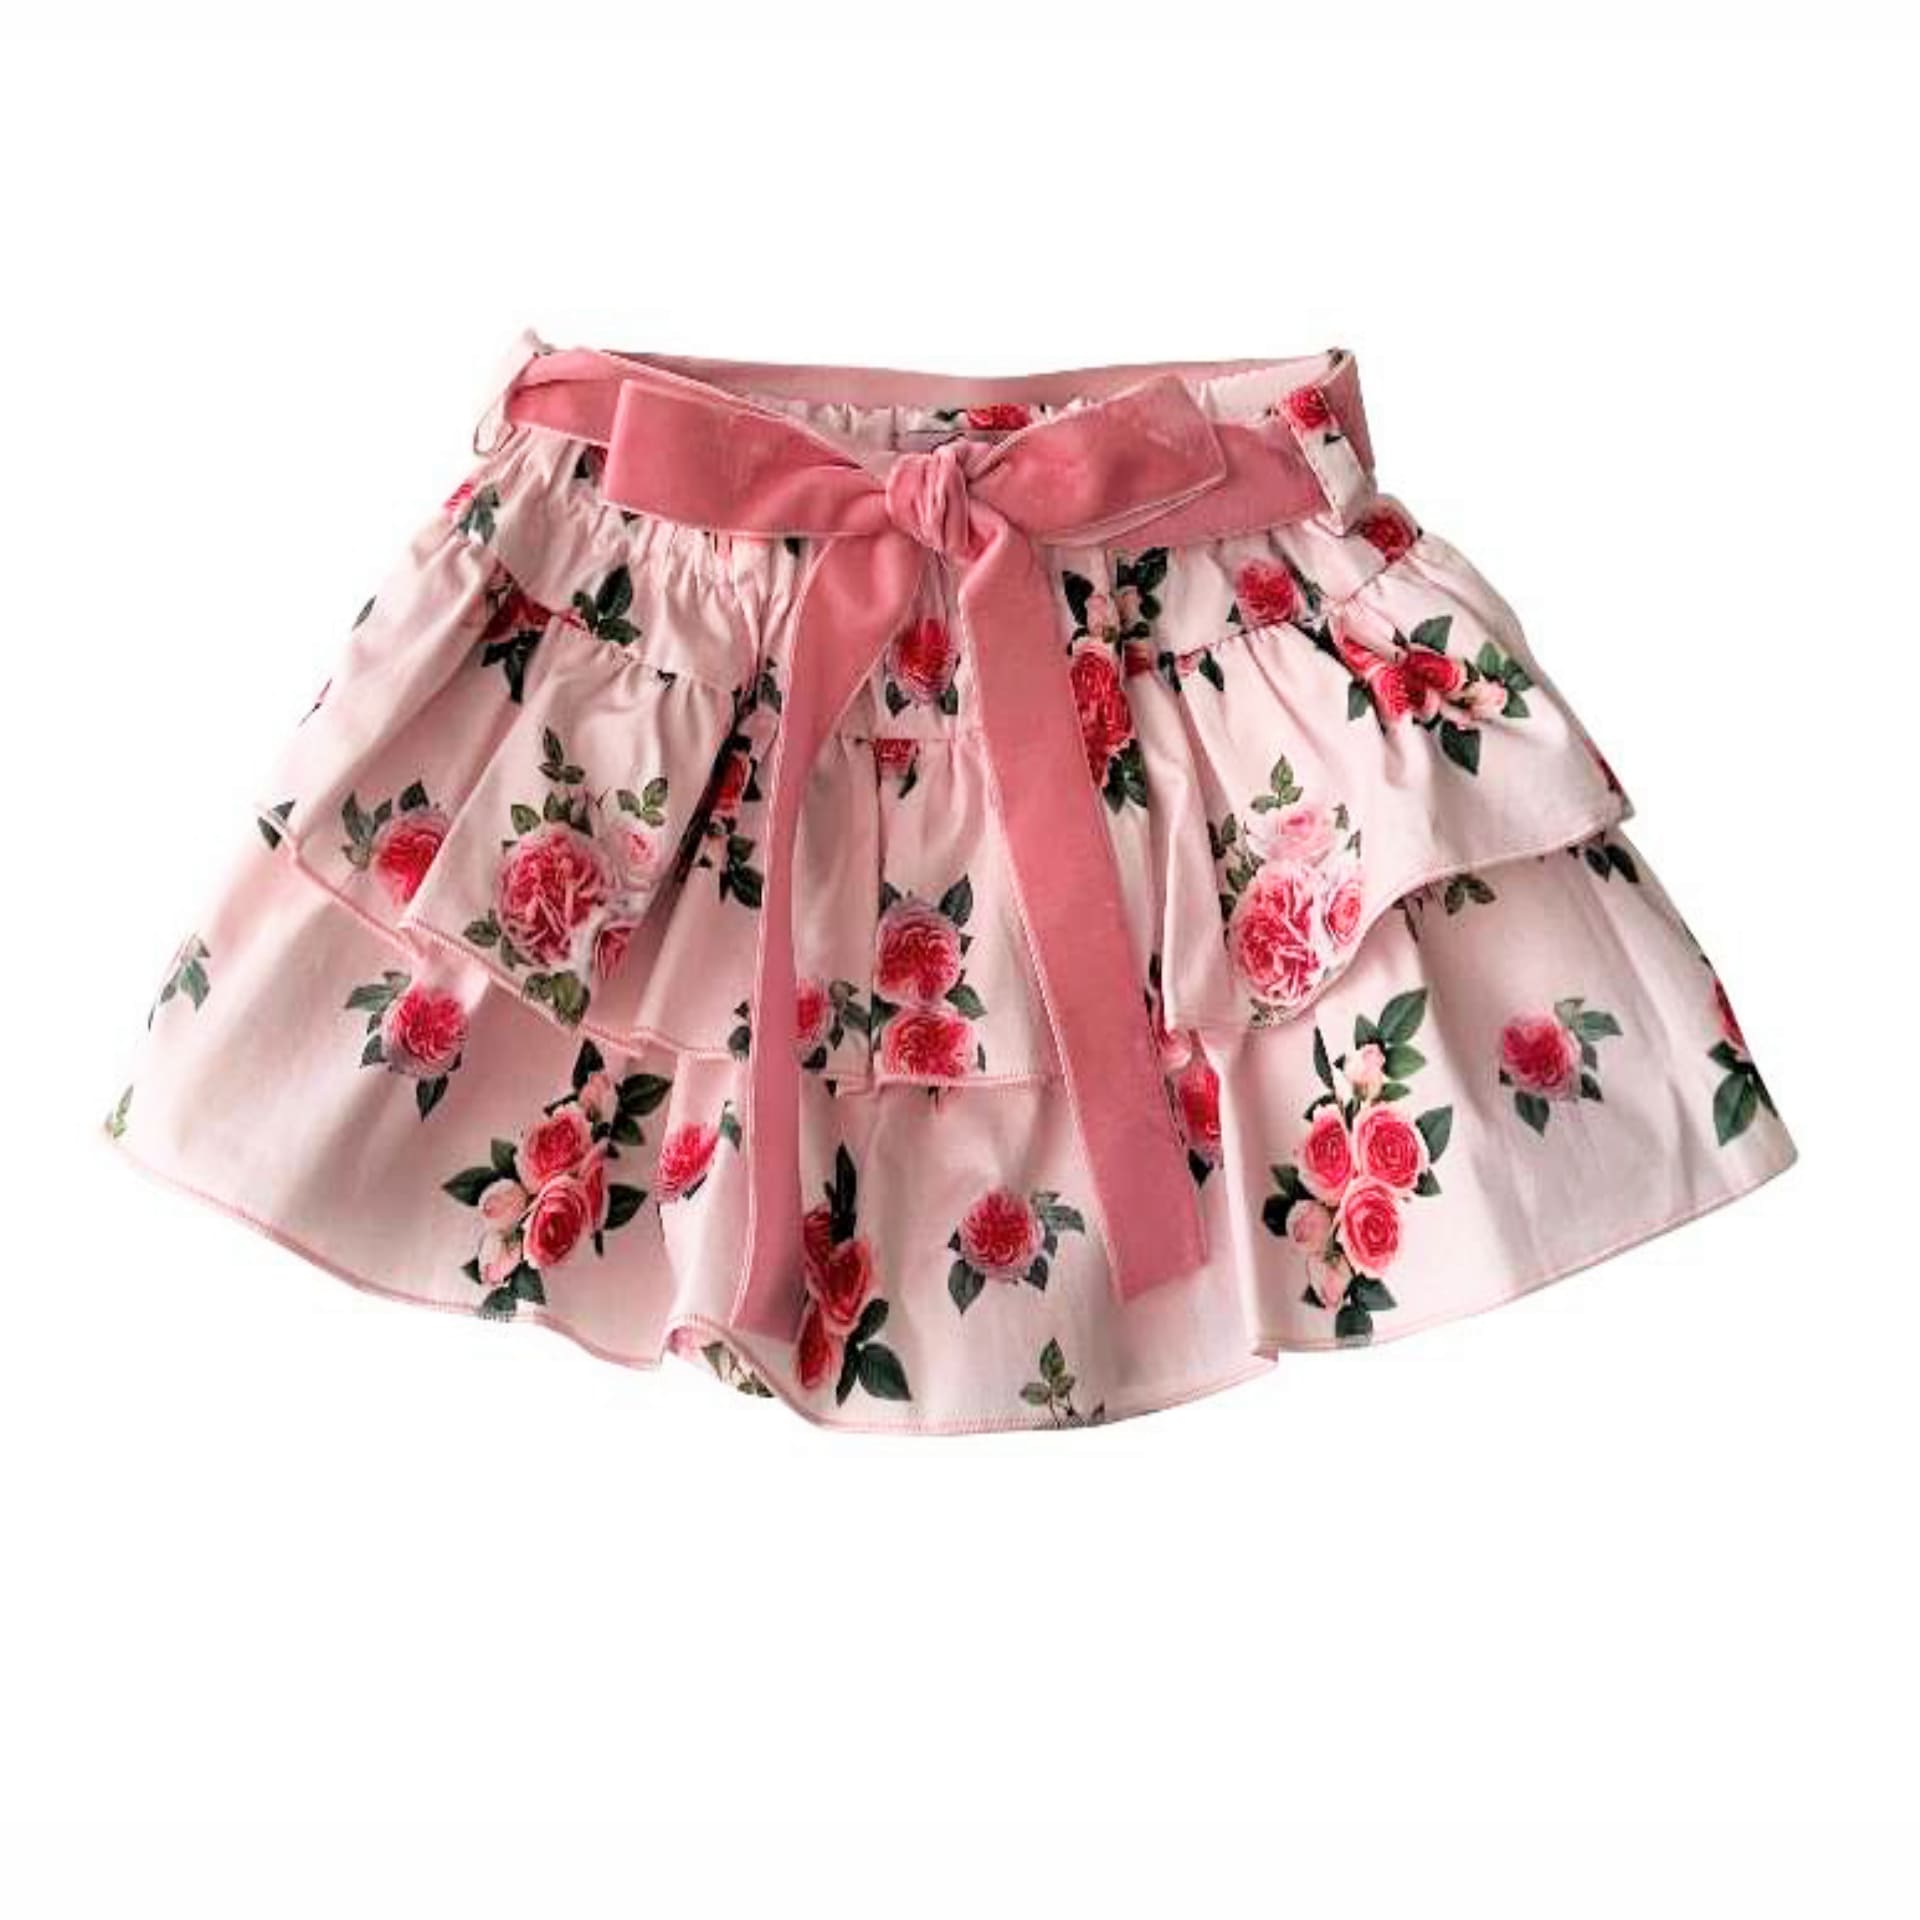 Pink camellia frill skirt